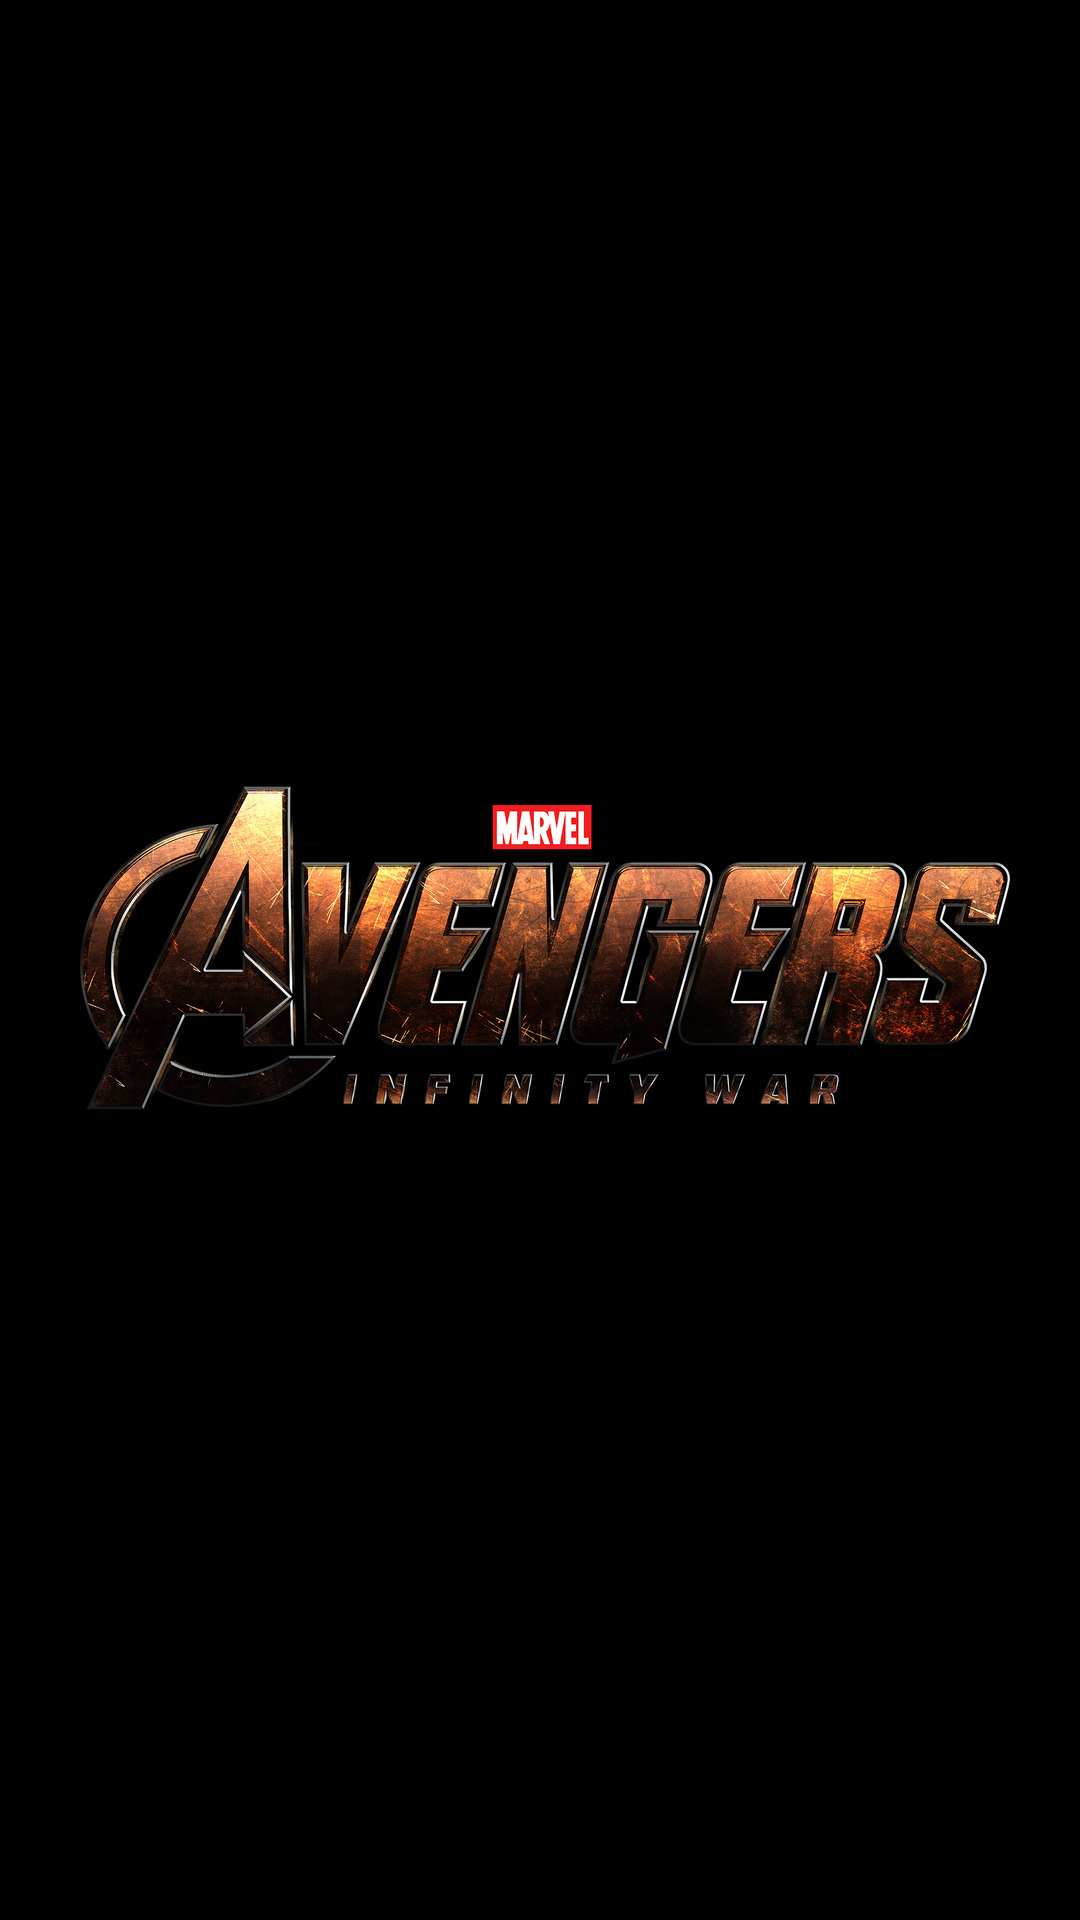 Avengers Infinity War Logo Best Htc One Wallpaper And